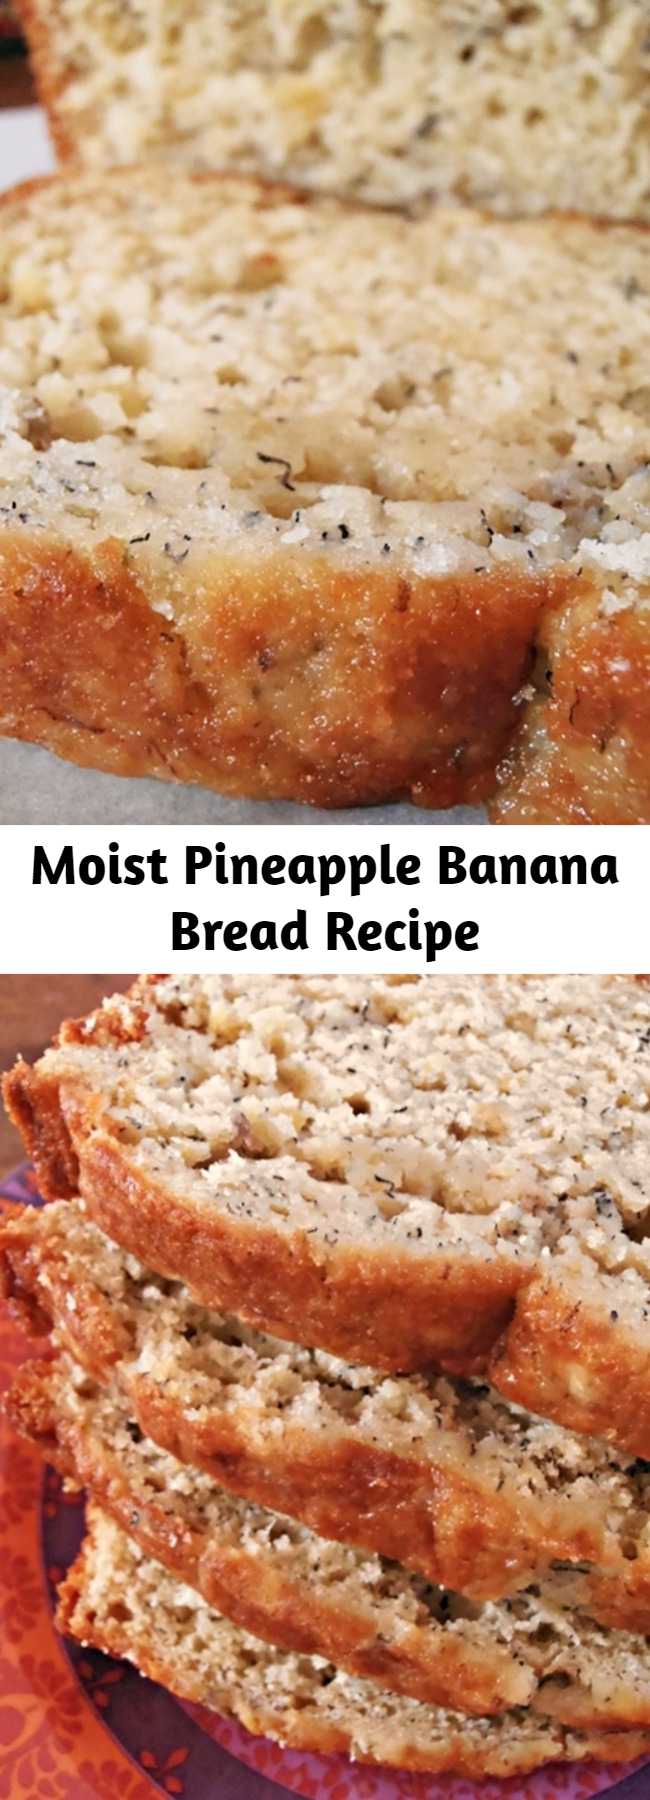 Moist Pineapple Banana Bread Recipe - Moist Pineapple Banana Bread takes a tropical twist on classic banana bread, using crushed pineapple and coconut.